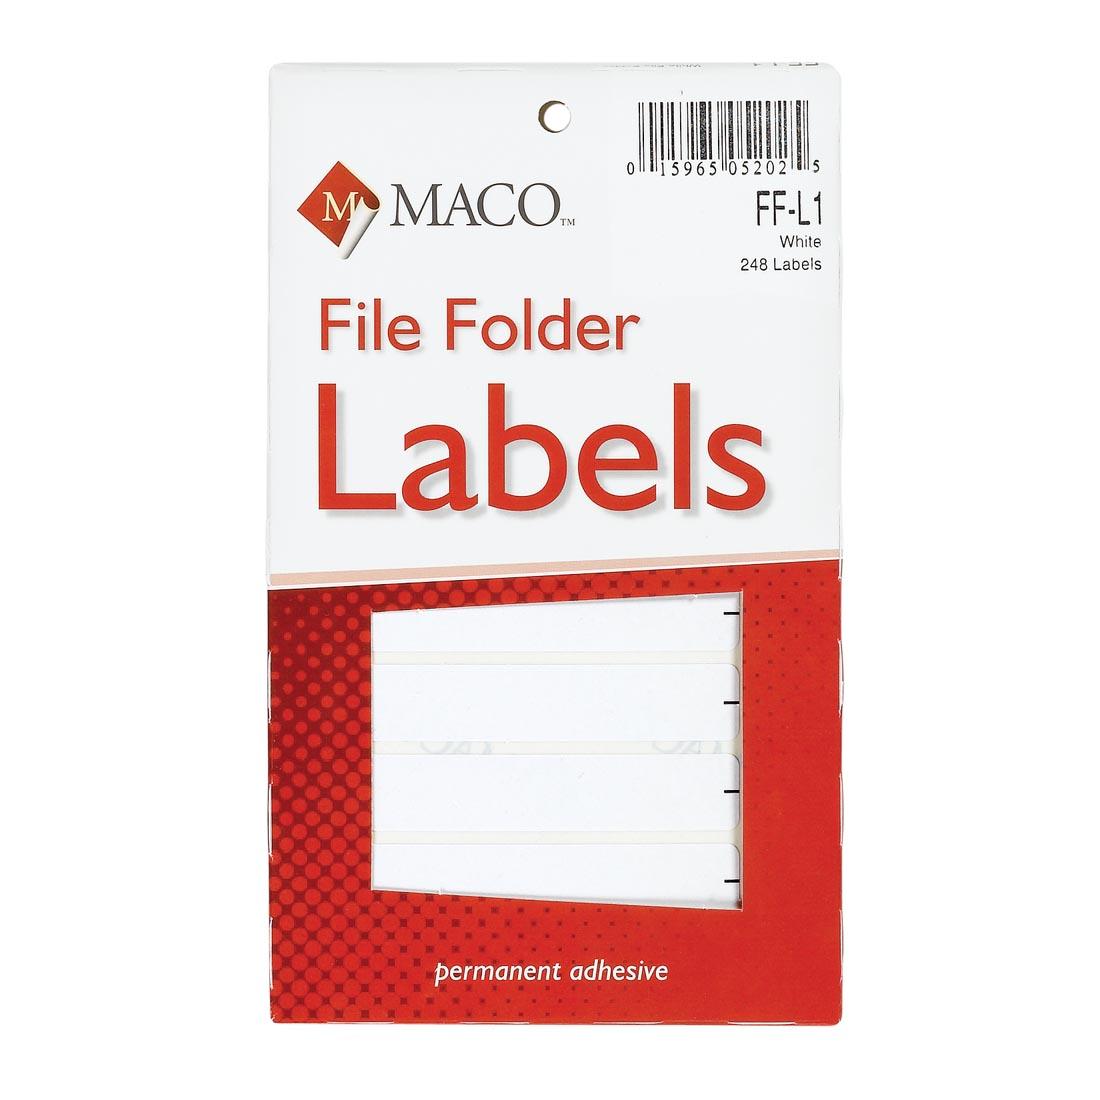 Box of White File Folder Labels